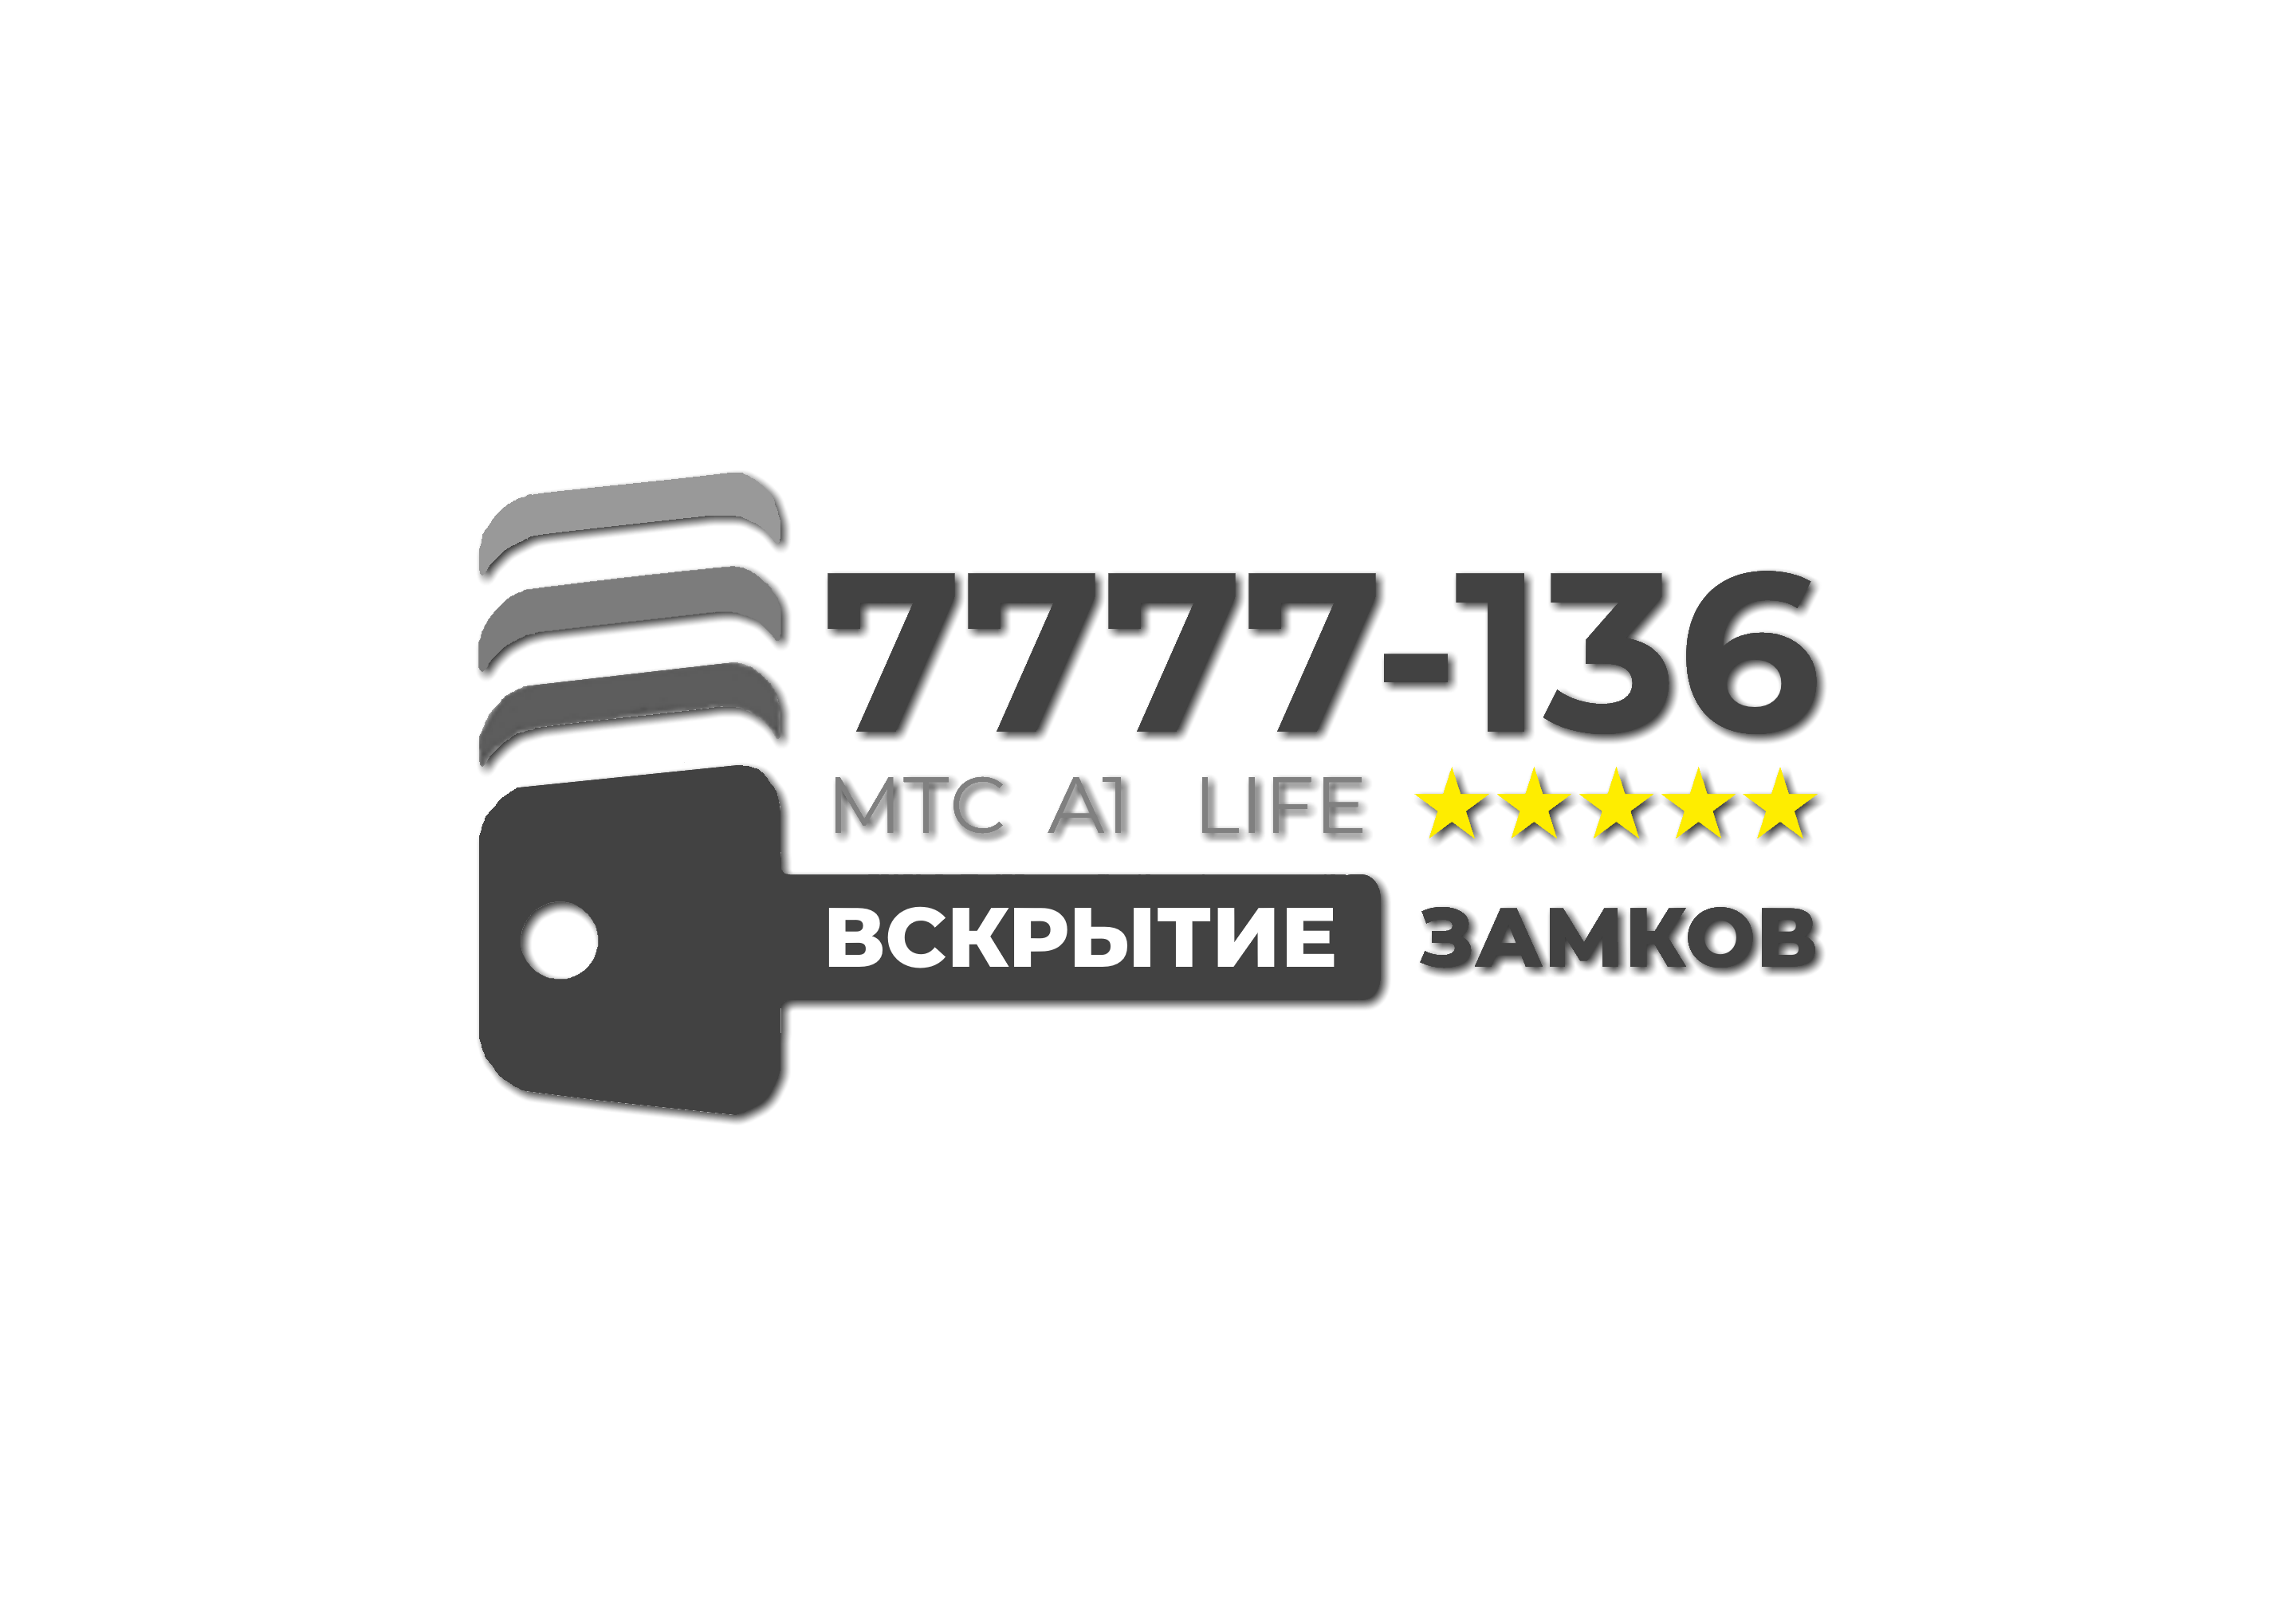 7777-136-a1-life